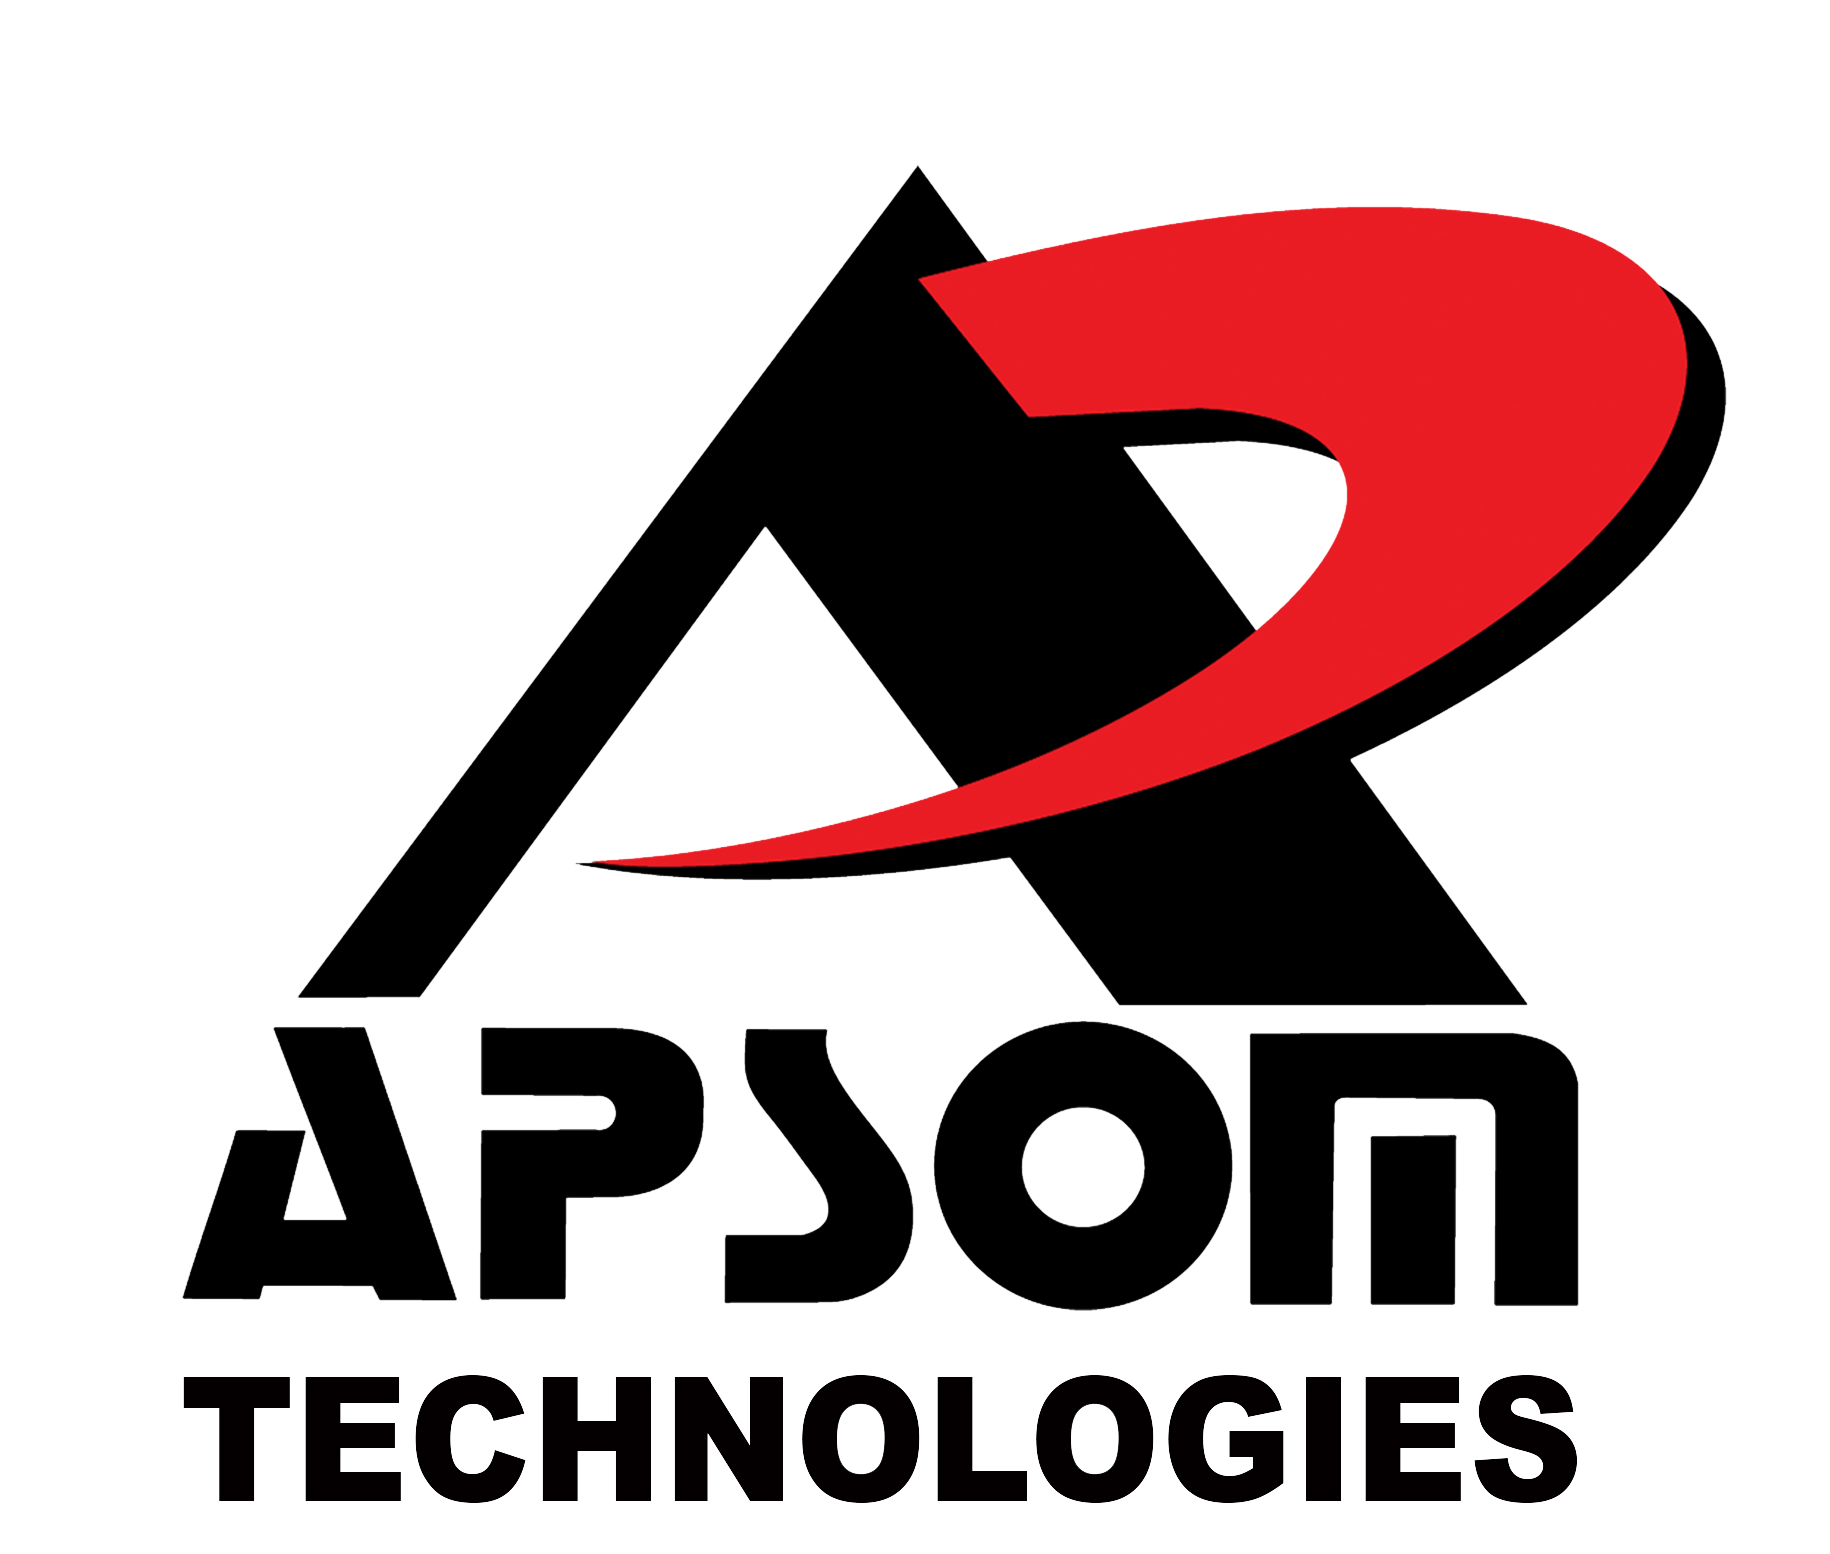 Apsom Technology India Pvt Ltd